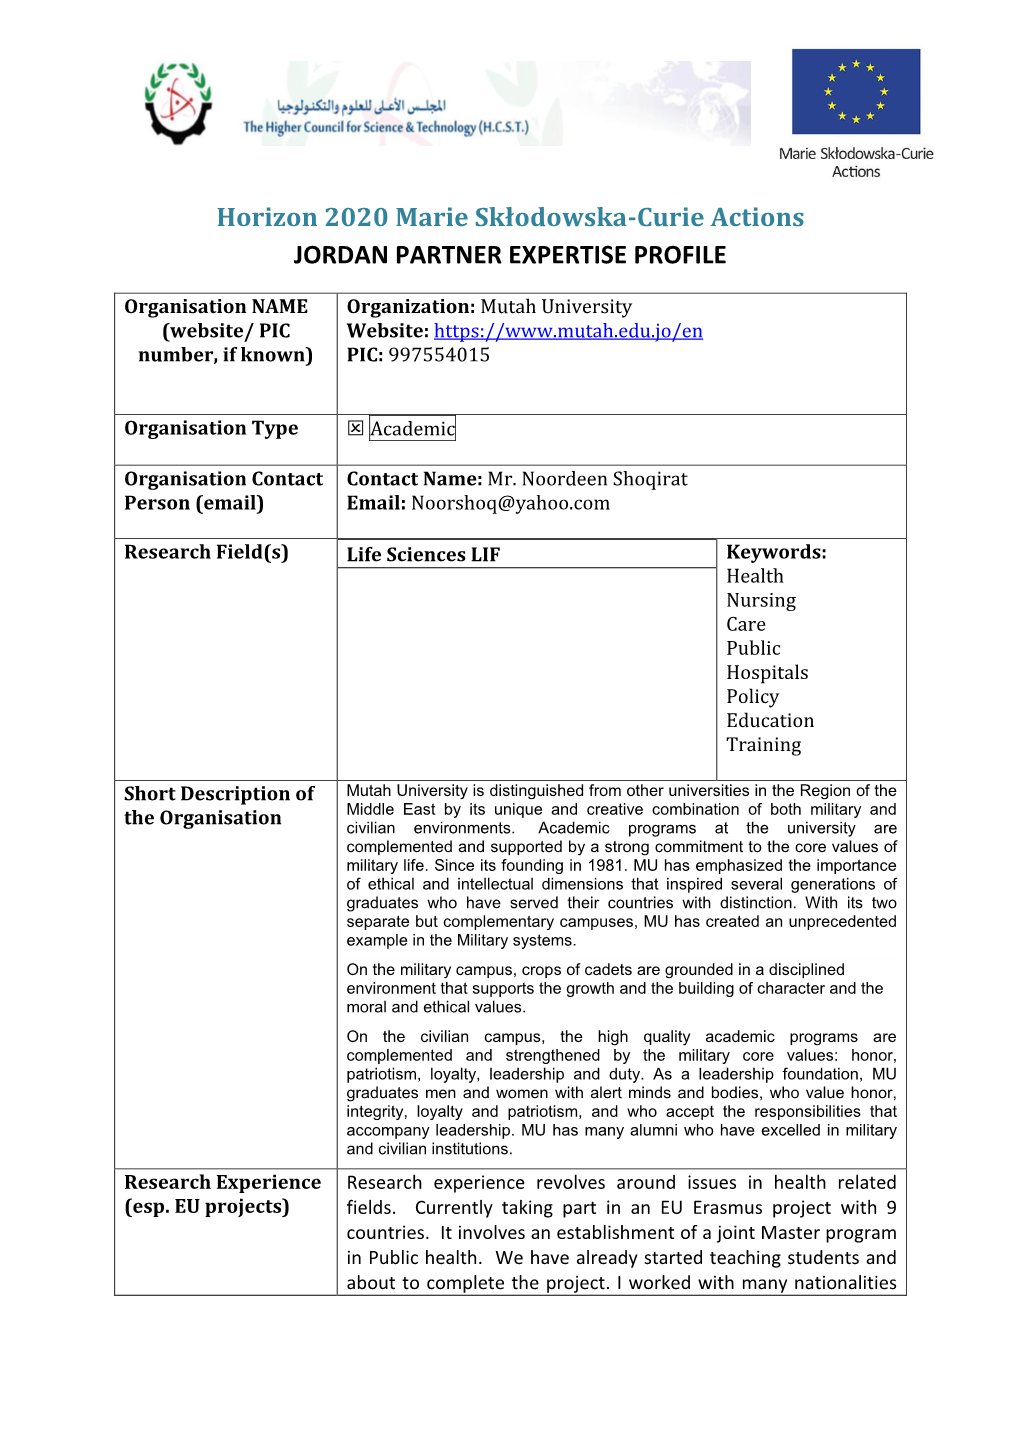 Horizon 2020 Marie Skłodowska-Curie Actions JORDAN PARTNER EXPERTISE PROFILE